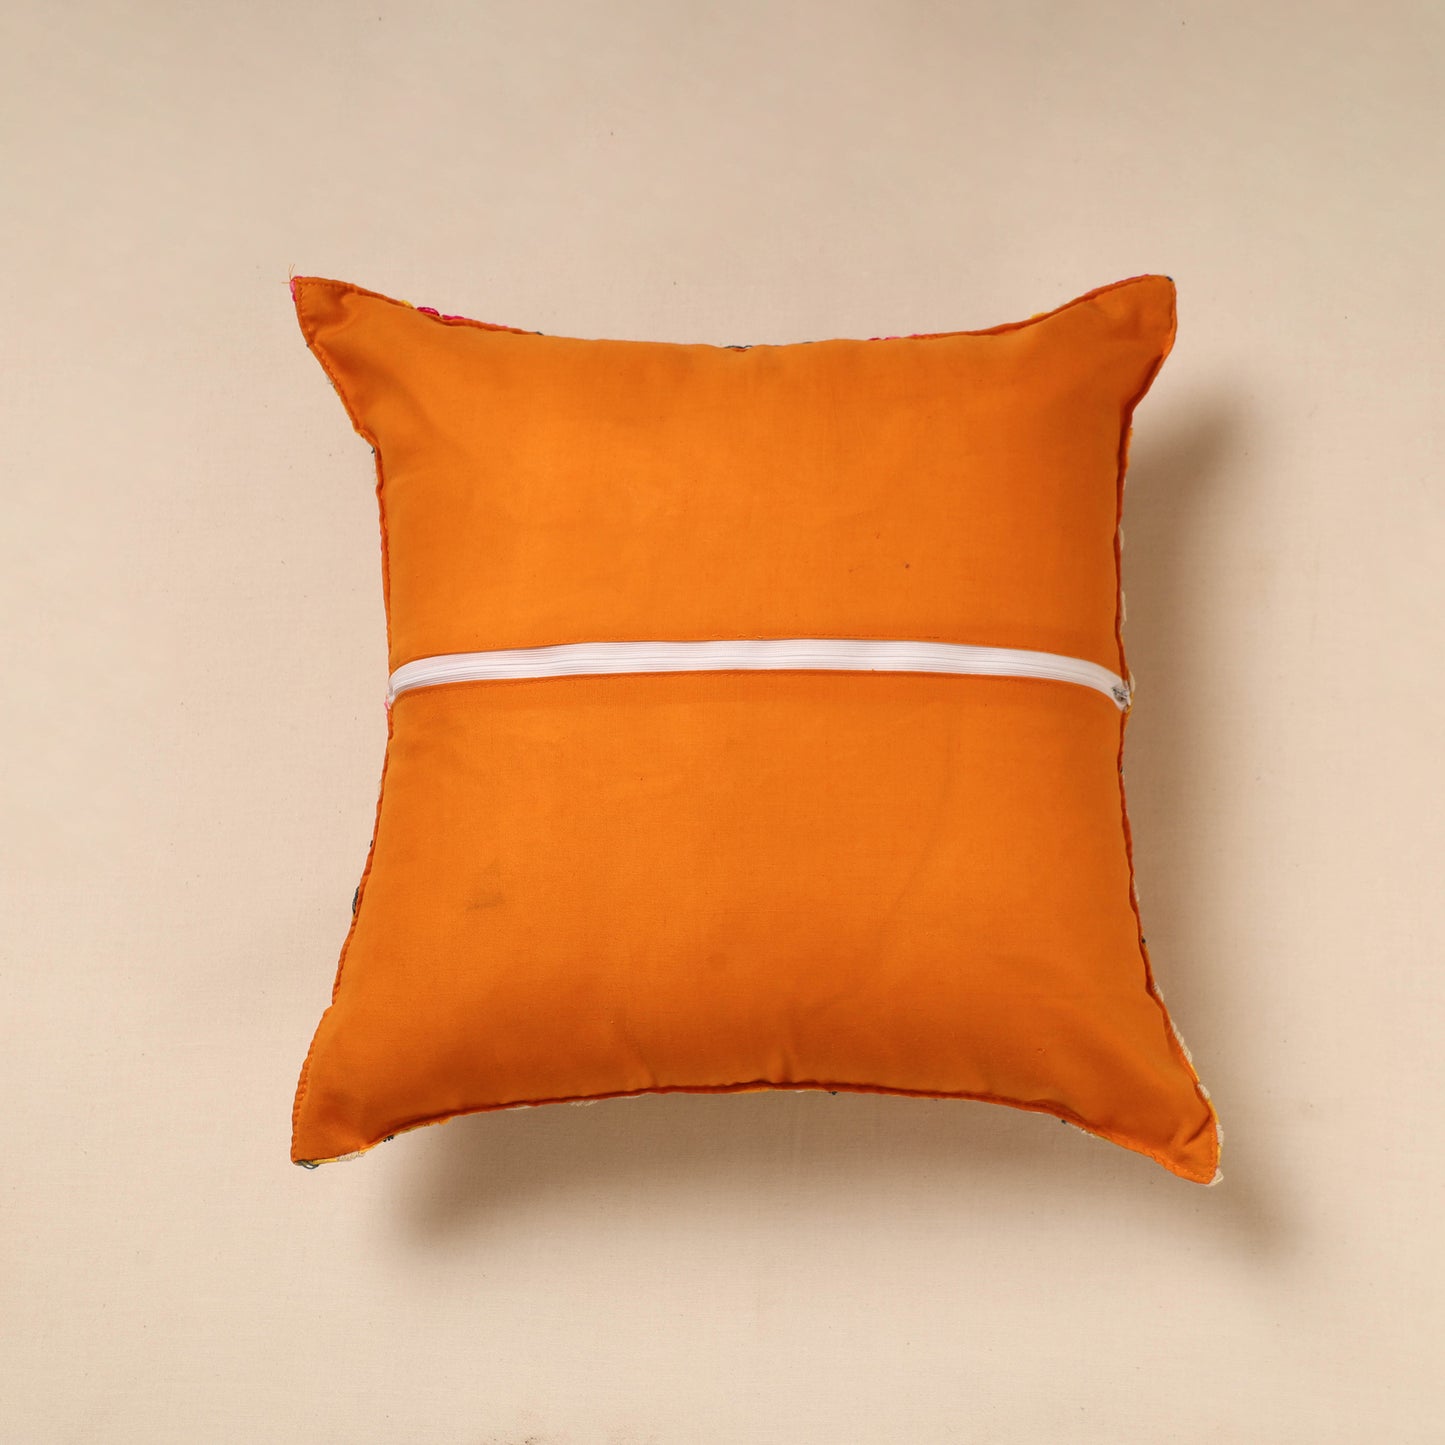 Yellow - Phulkari Hand Embroidery Chanderi Silk Cushion Cover (16 x 16 in)